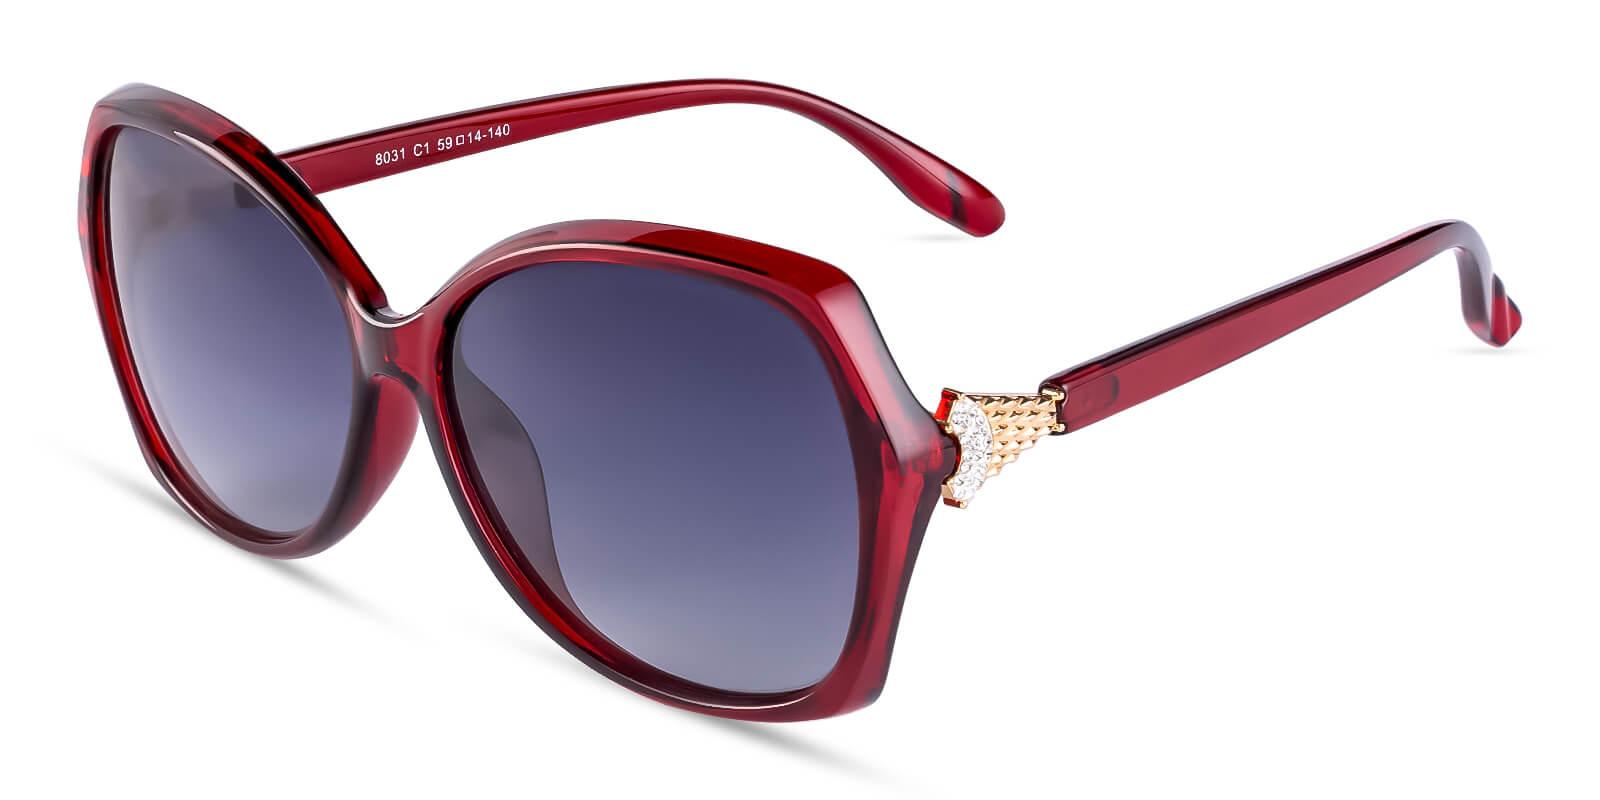 Fly Red TR Sunglasses , UniversalBridgeFit Frames from ABBE Glasses